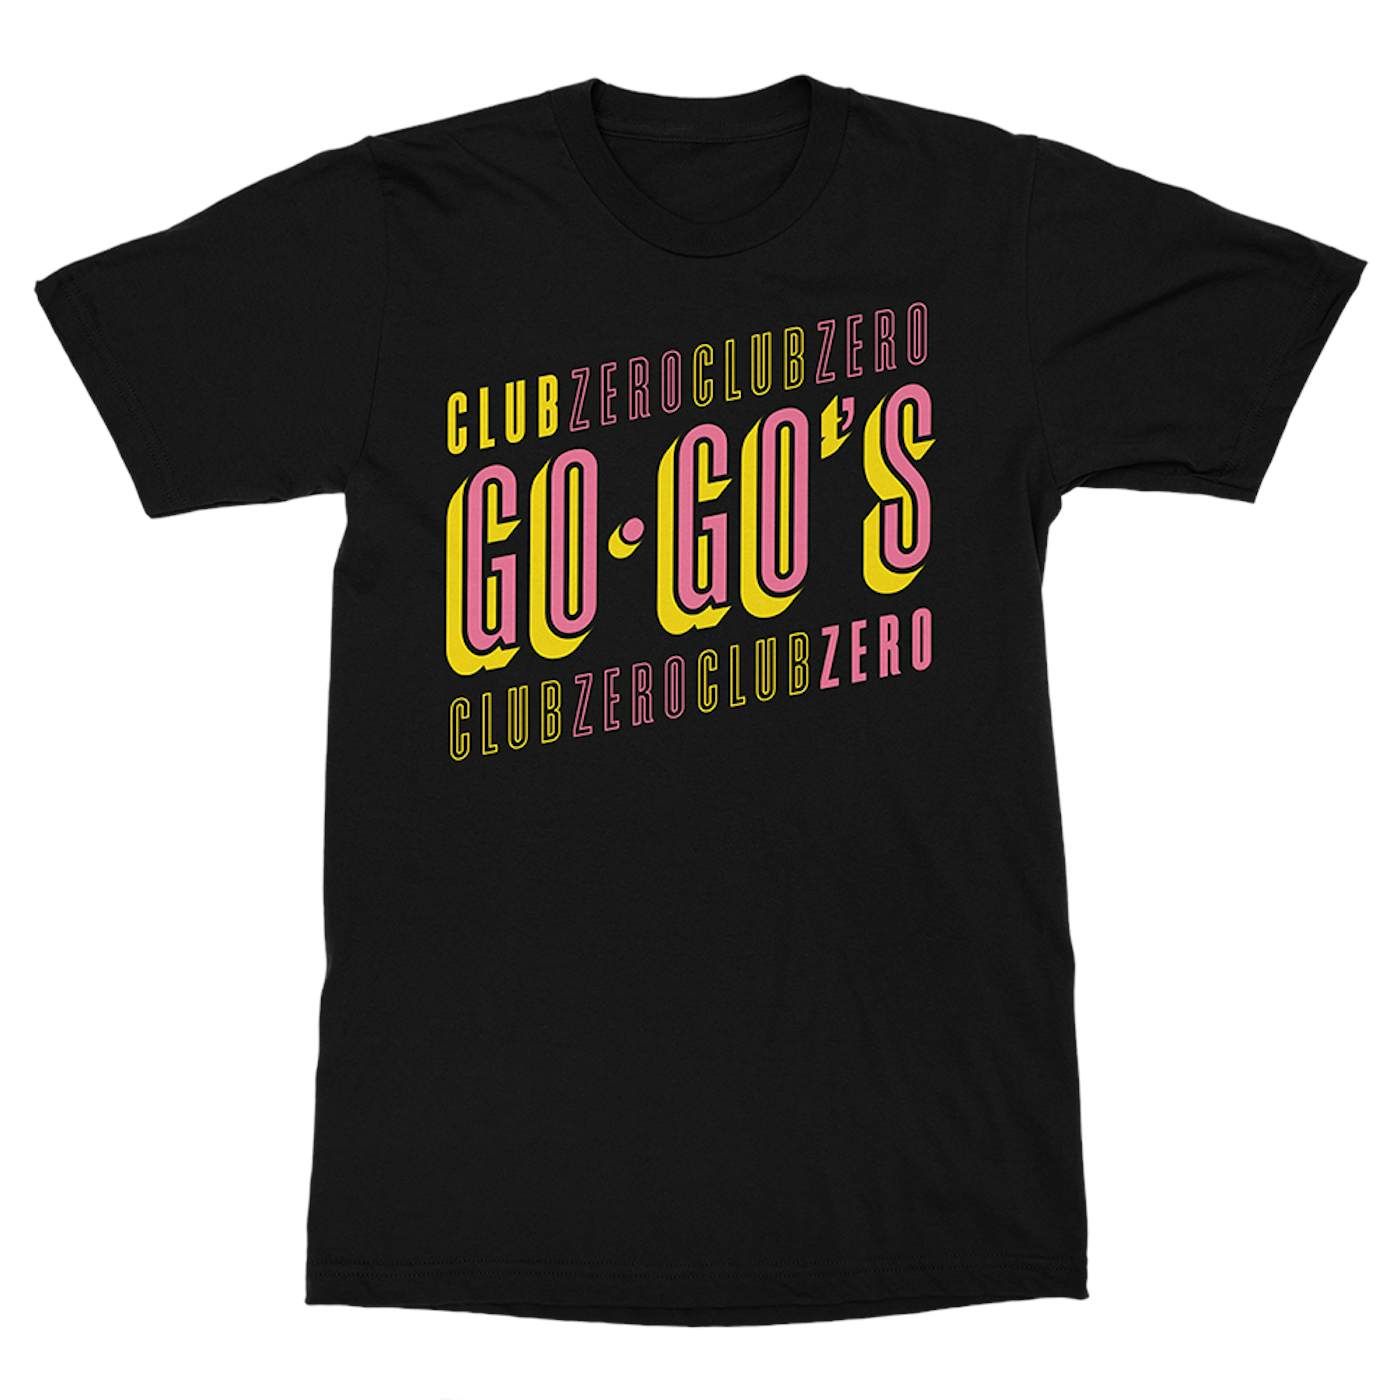 The Go-Go's Club Zero T-Shirt